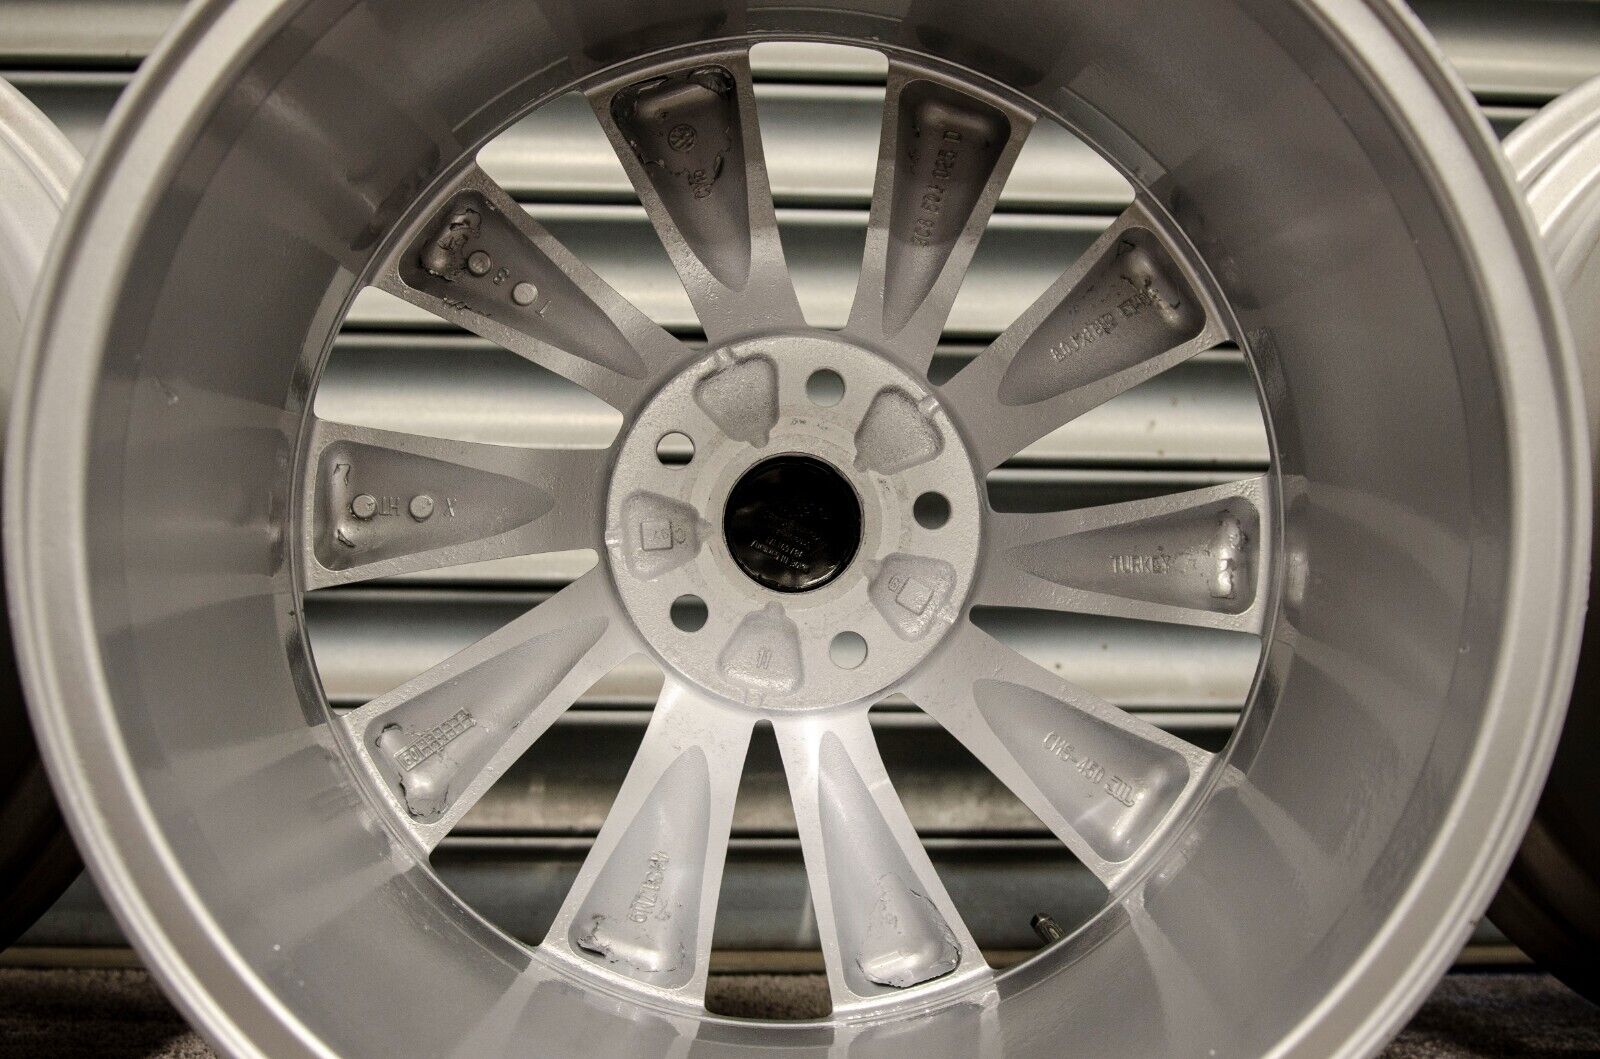 Refurbished Genuine 18" VW Scirocco/Passat Turbine Interlagos 5x112 Alloy Wheels 3C8601025D - Autosthetic